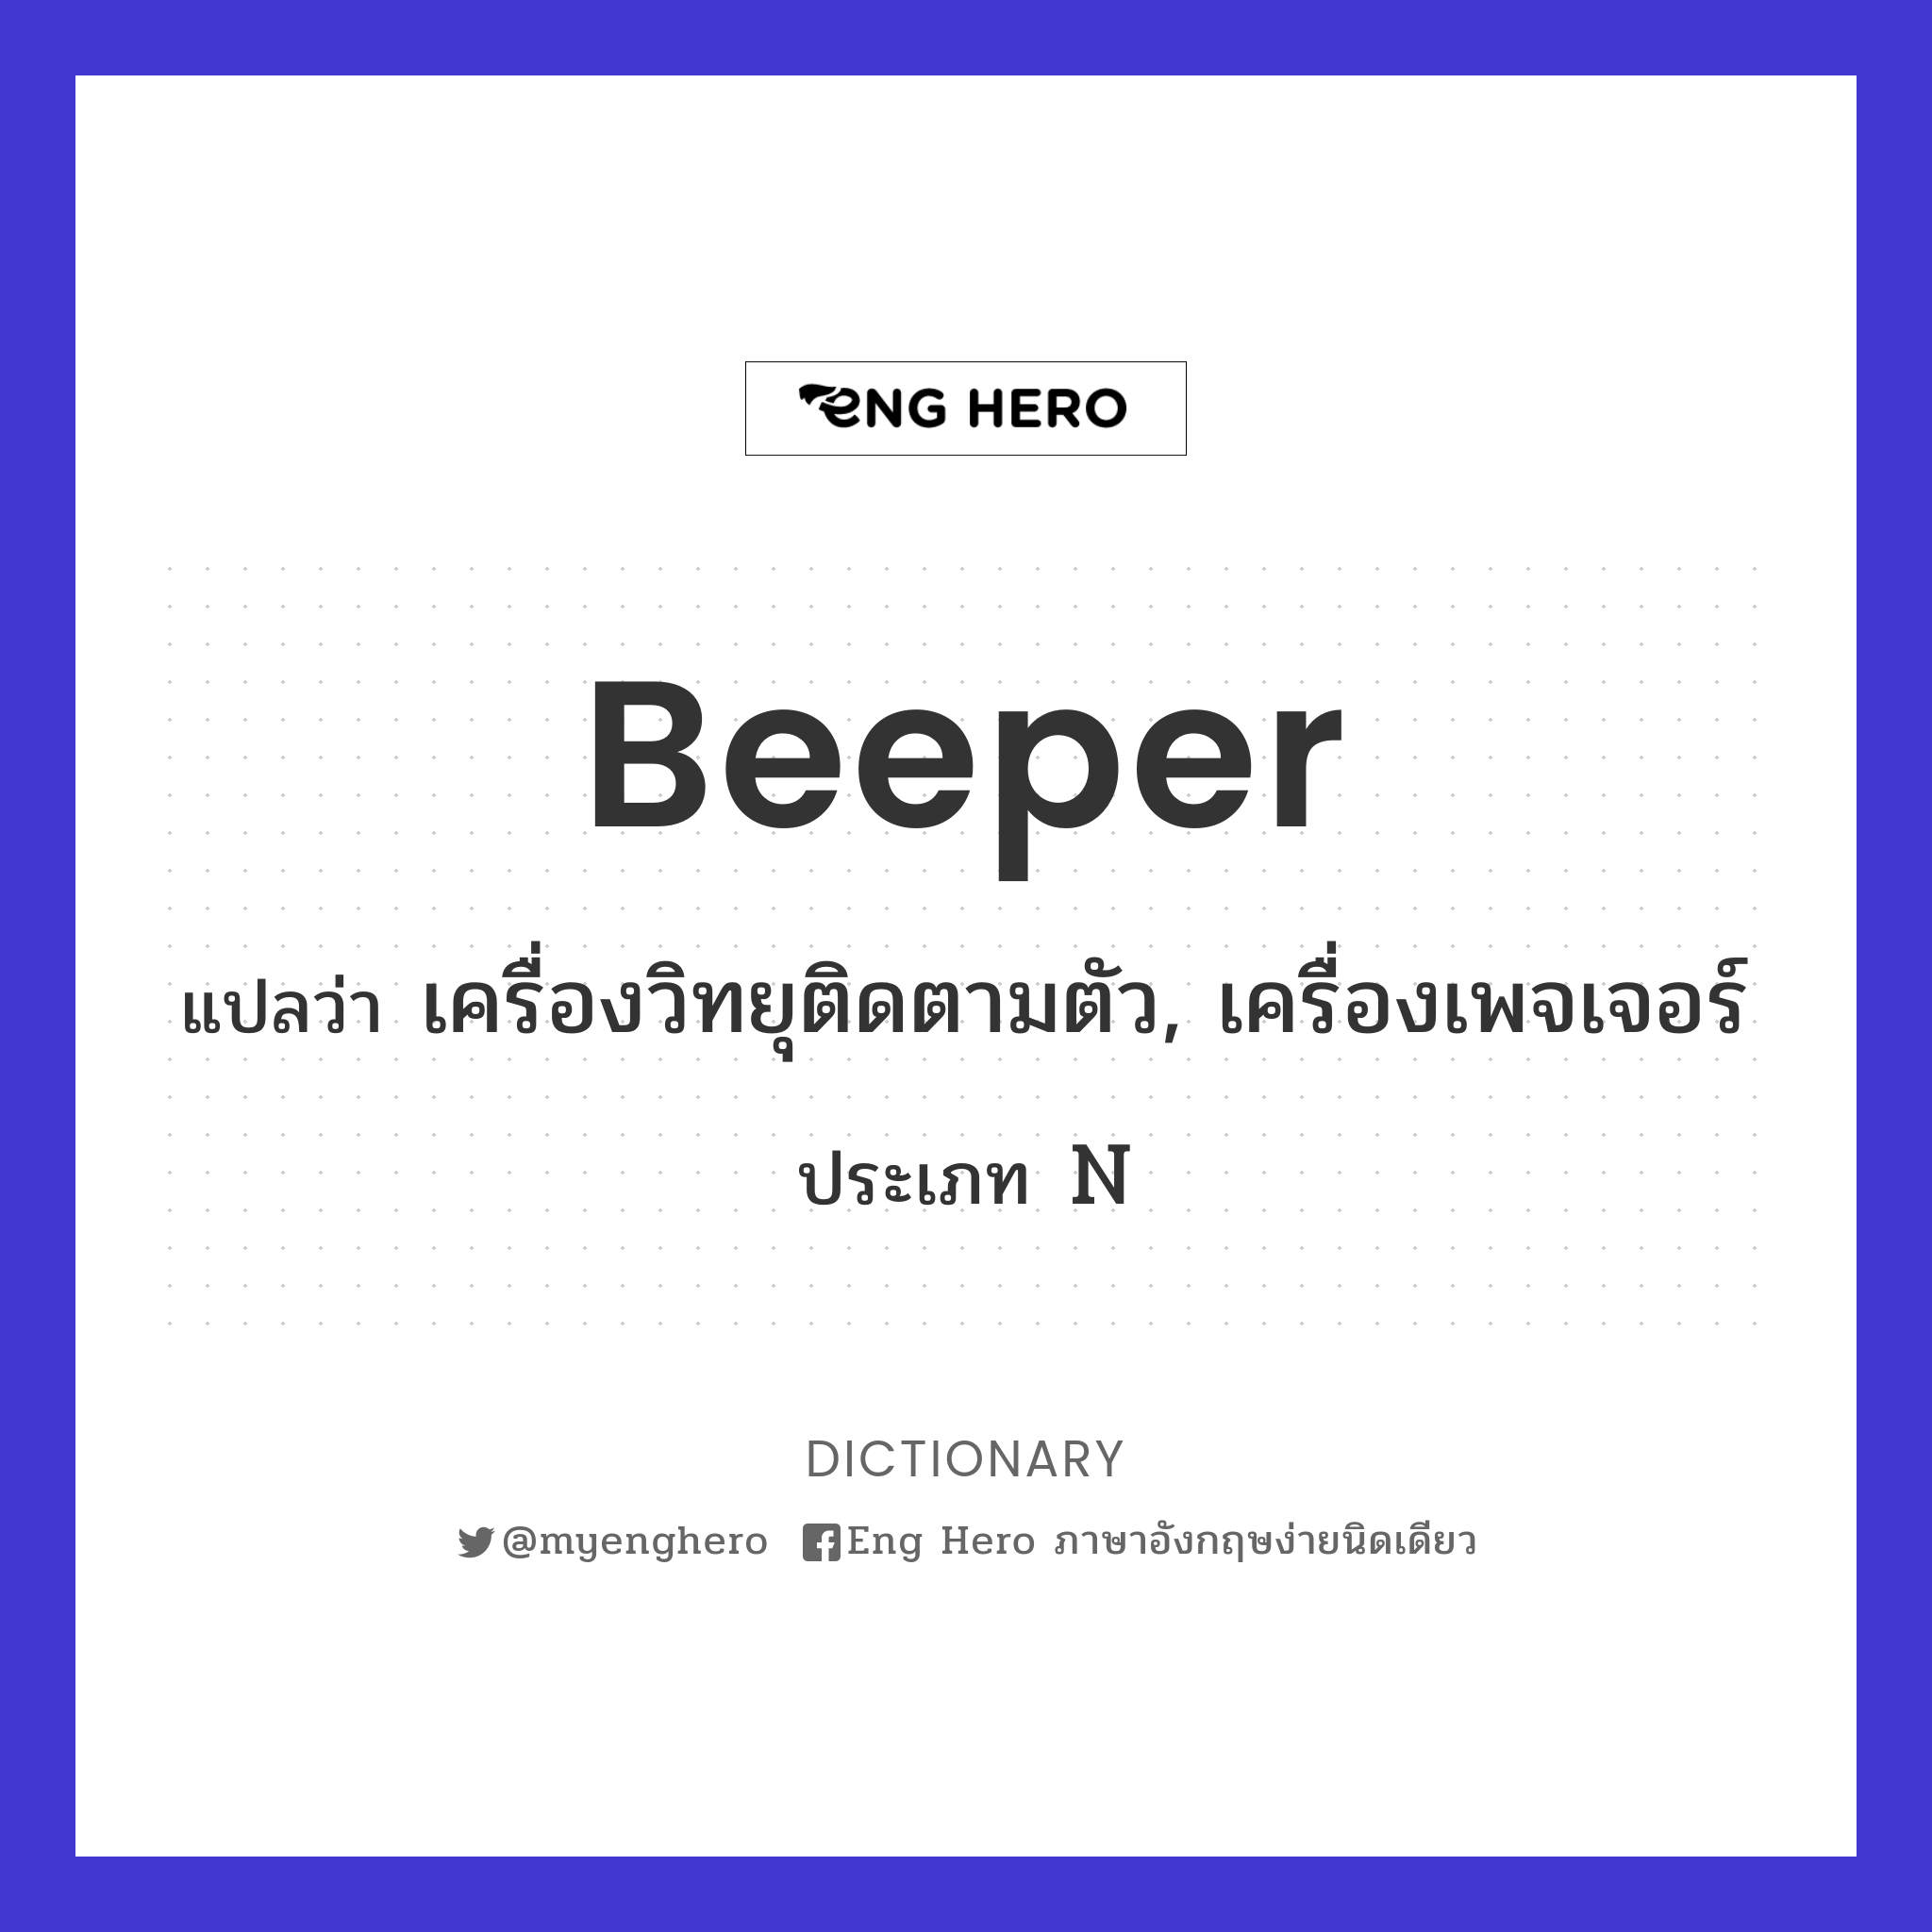 beeper